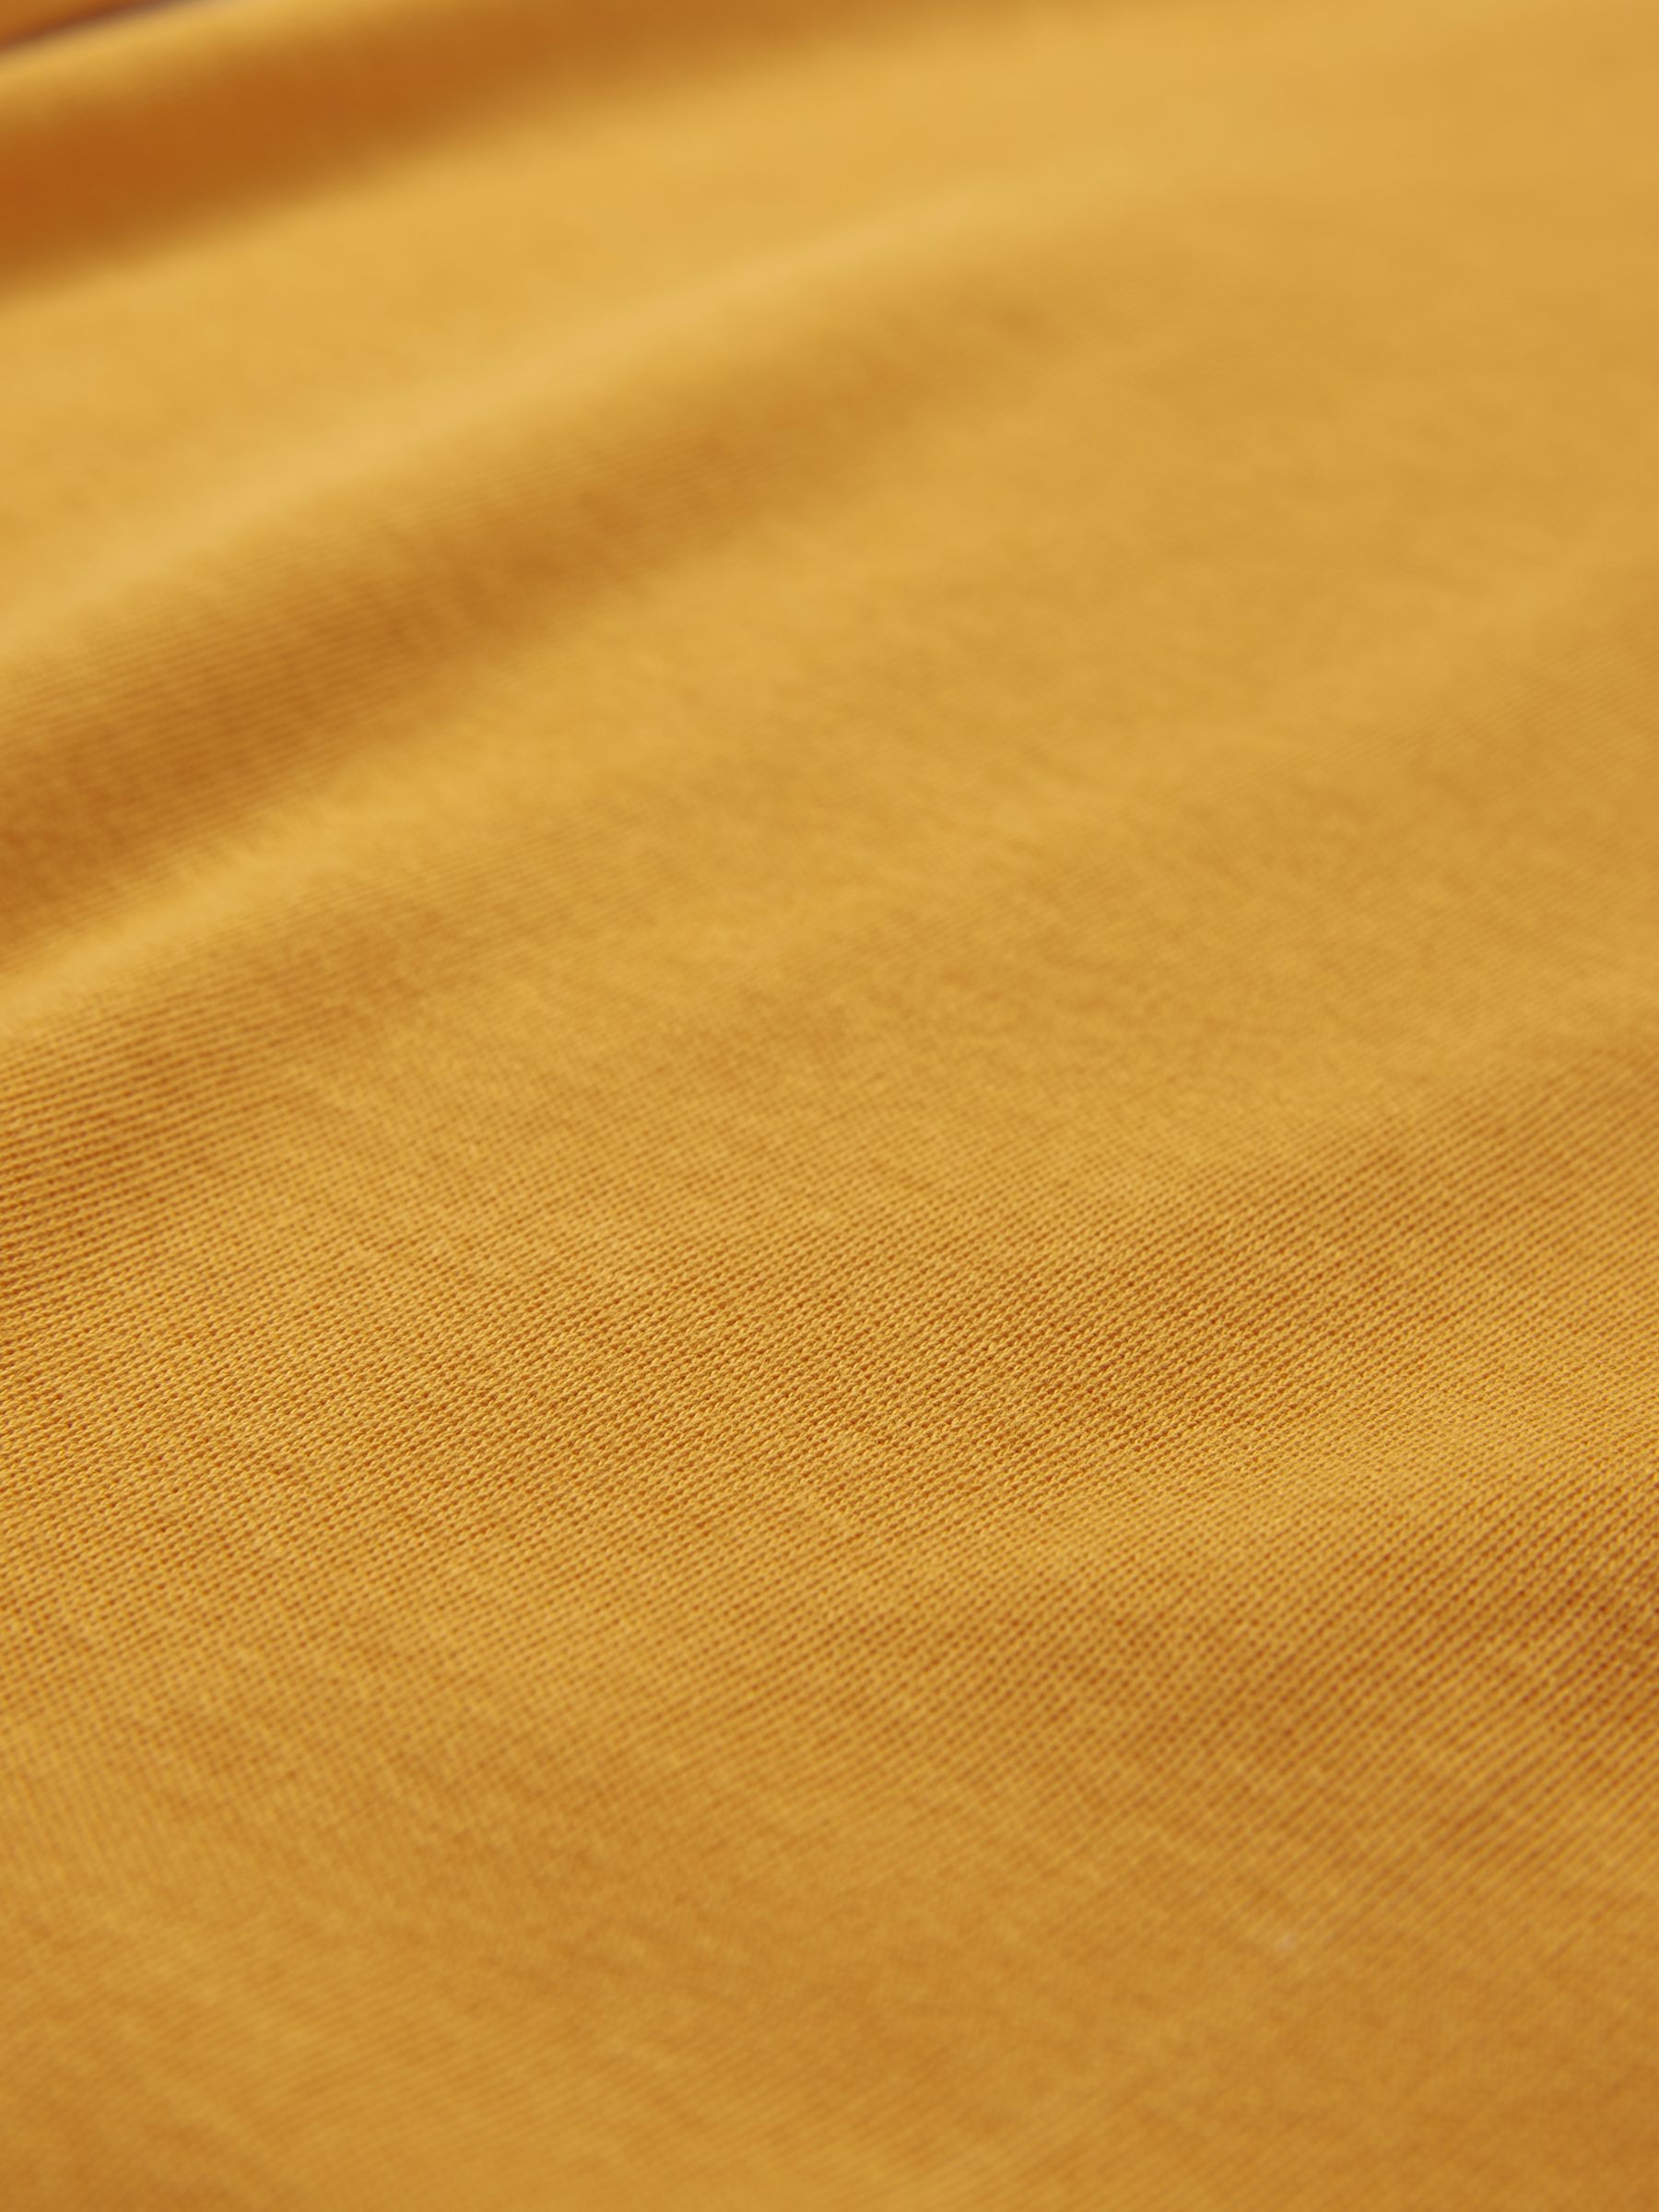 Buy Celtic & Co. Organic Cotton Long Sleeve T-Shirt Online at johnlewis.com